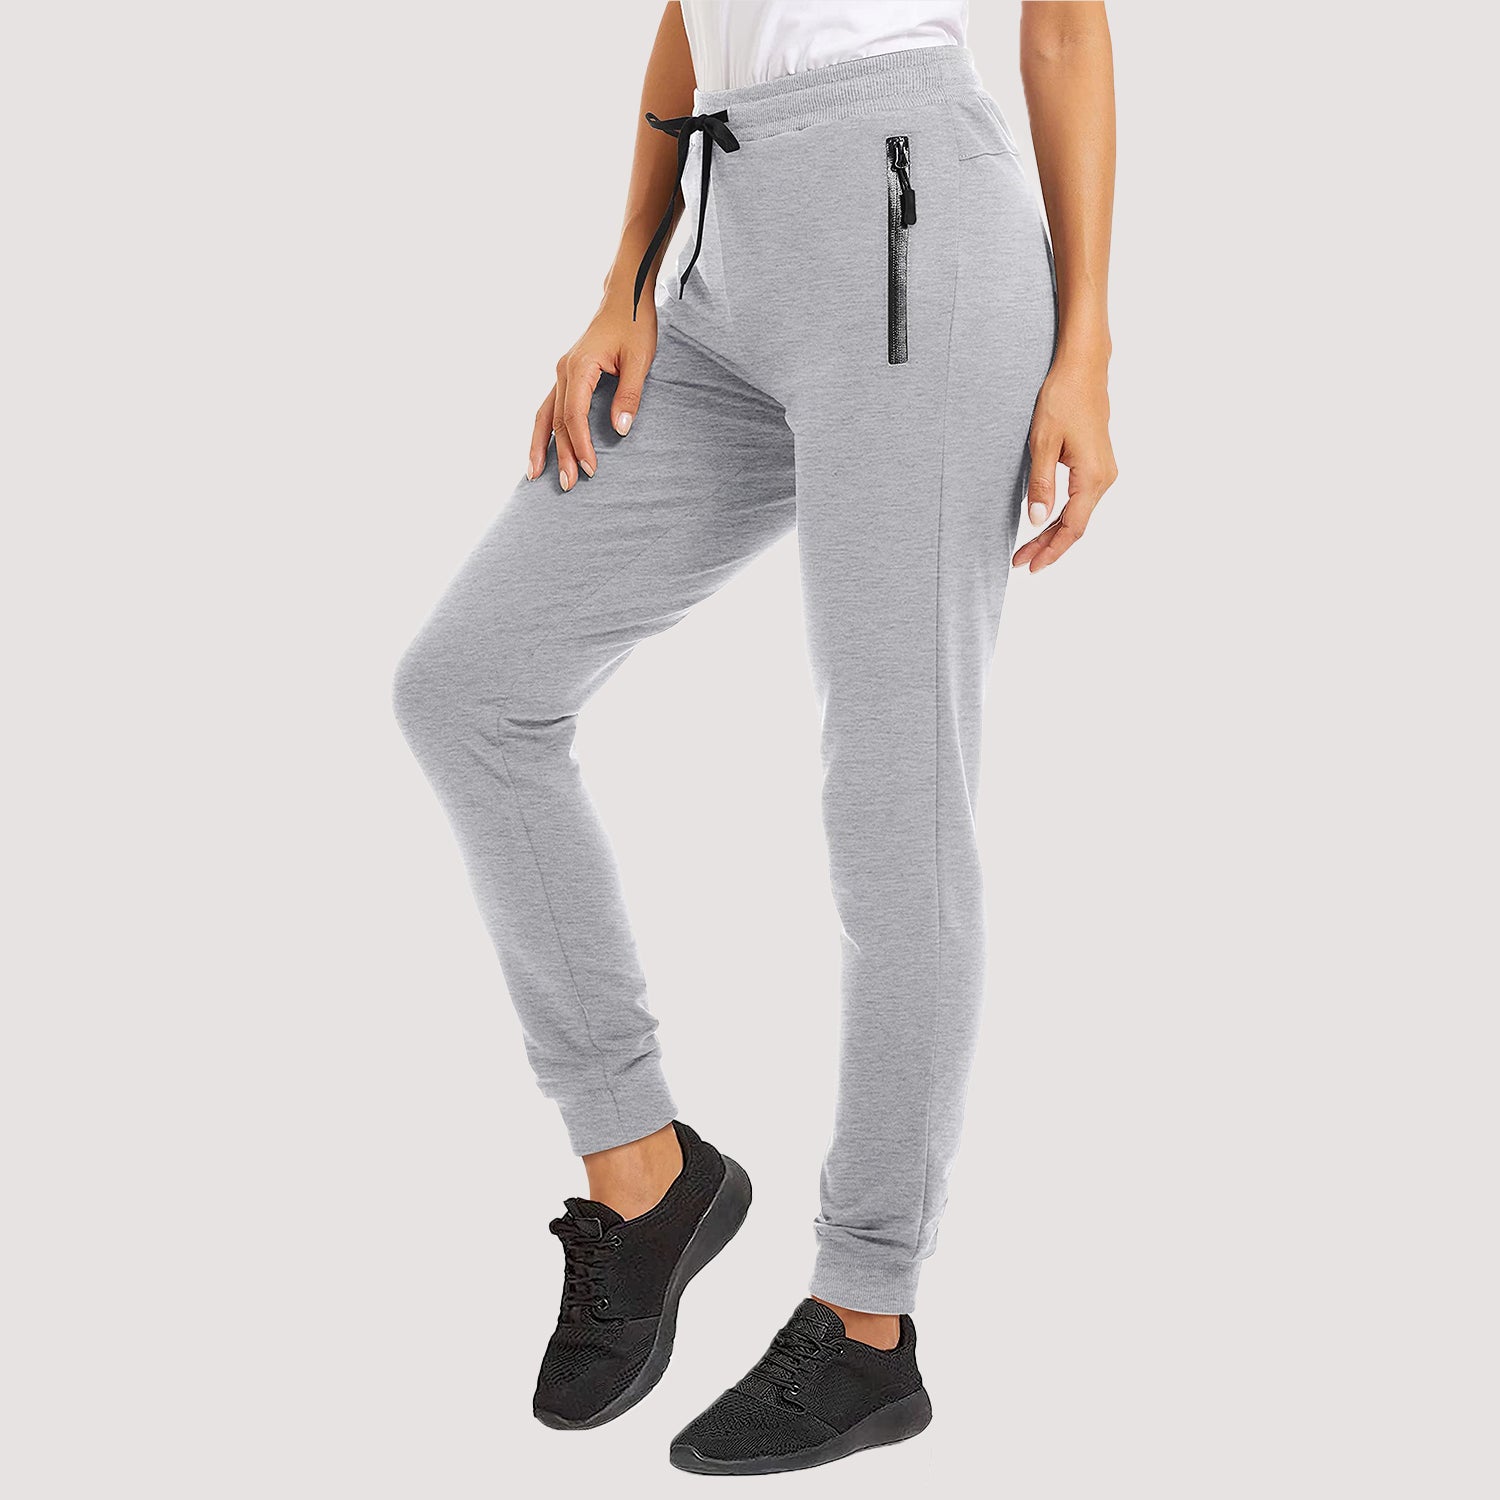 Women's Joggers Pants with Zipper Pockets Workout Gym Pants Running Sweatpants